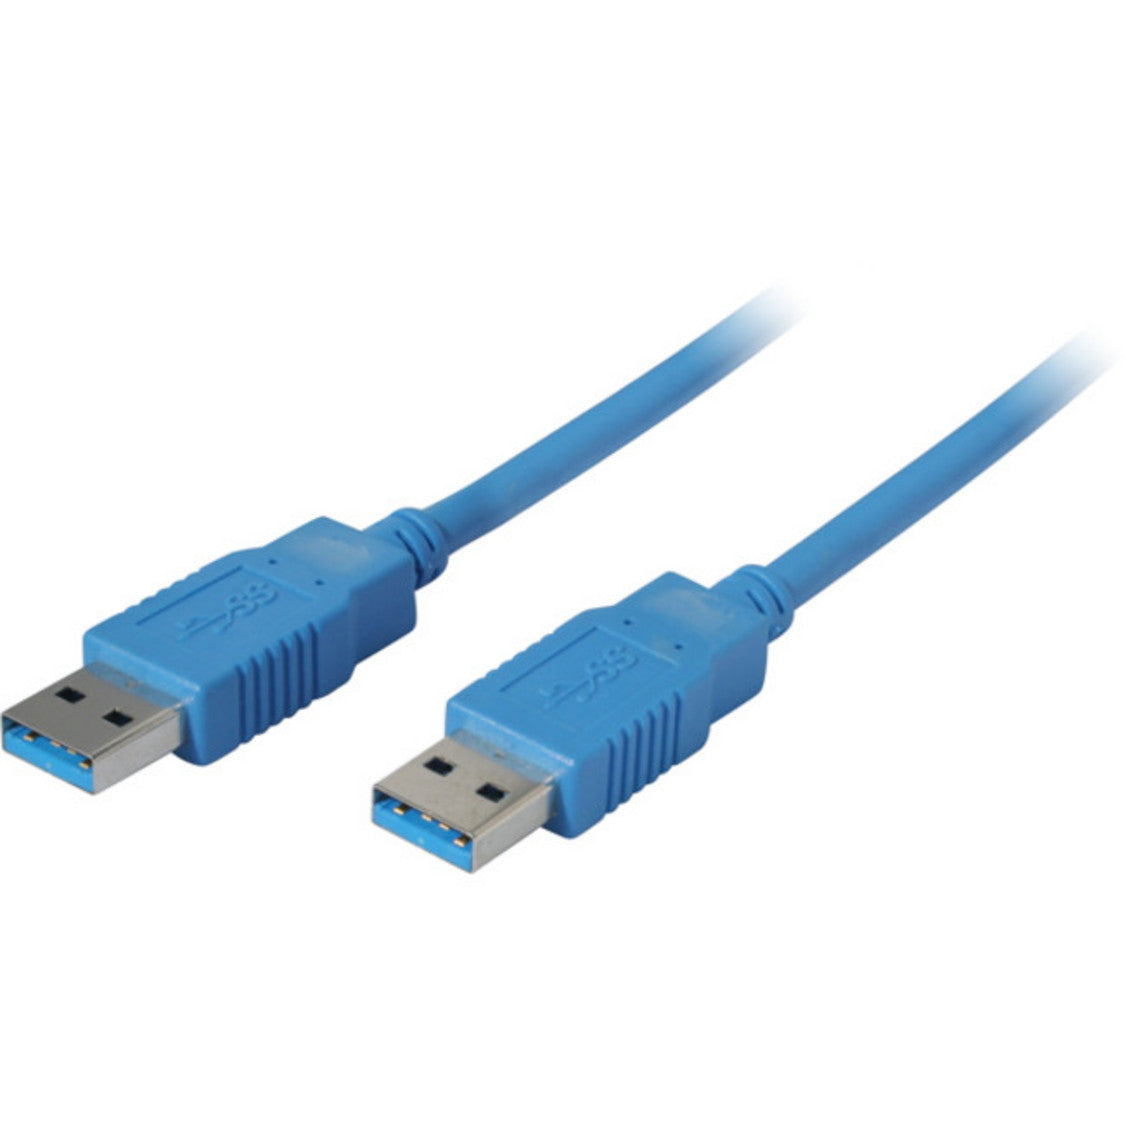 USB Kabel, Typ A Stecker auf Typ A Stecker, USB 3.0